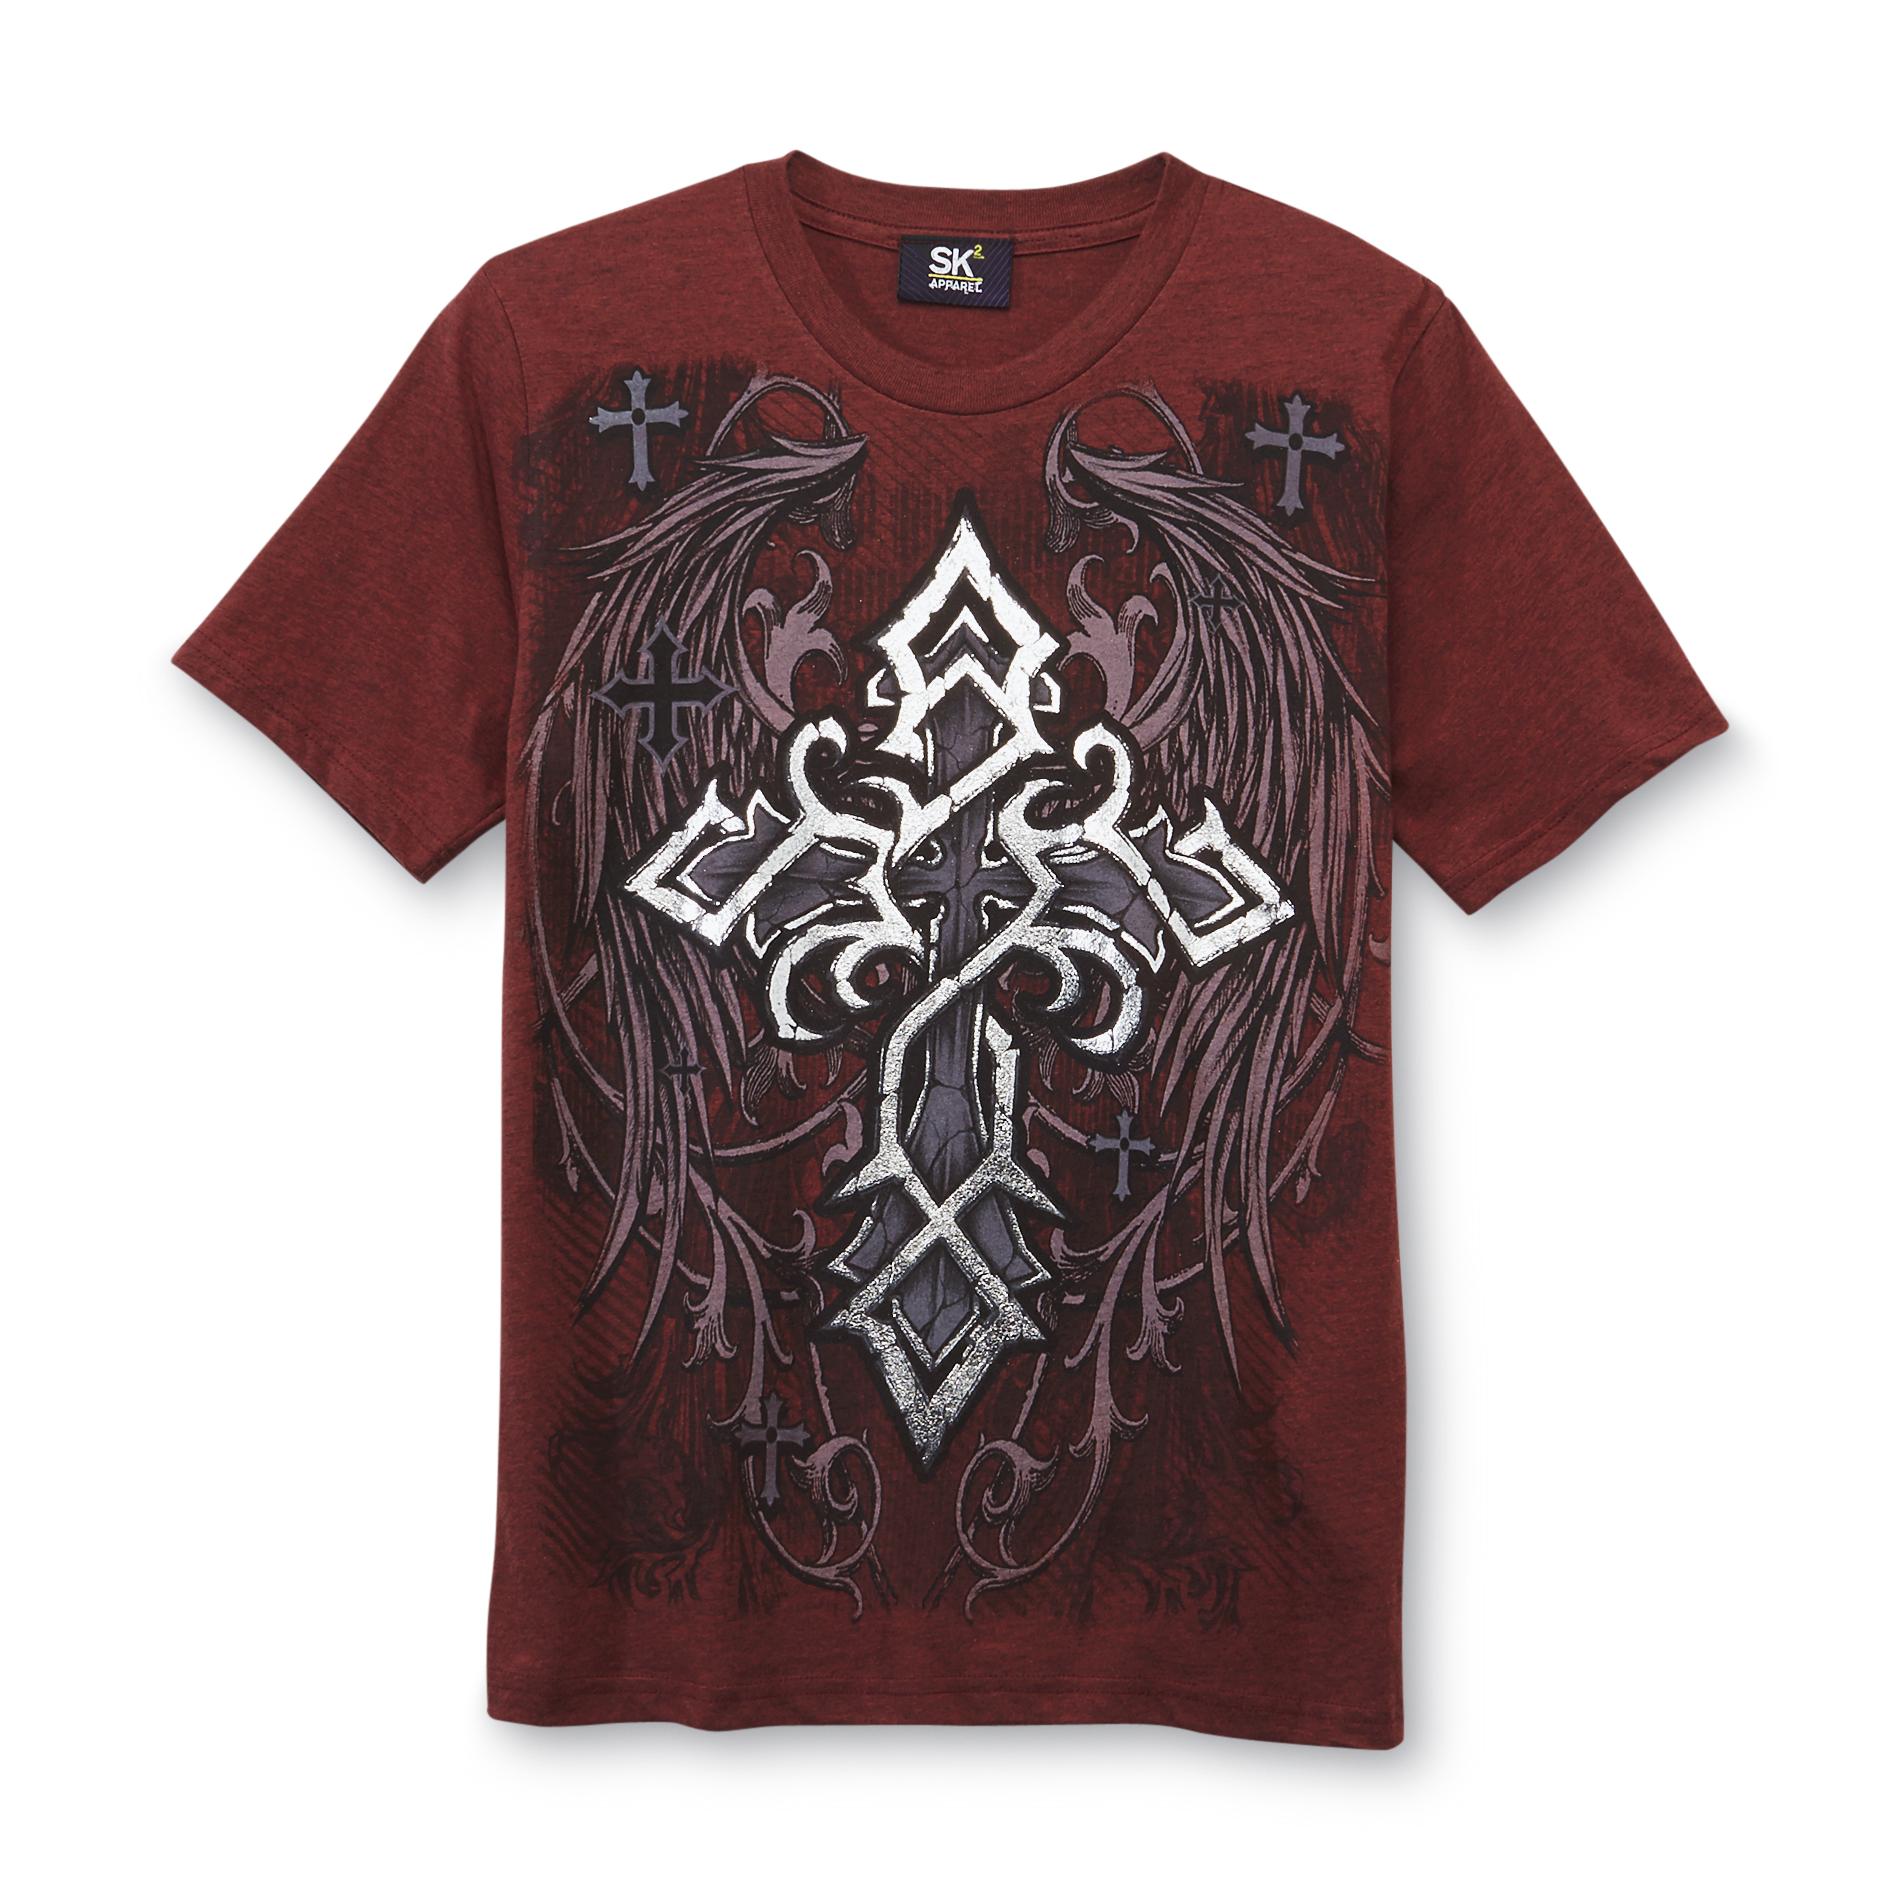 SK2 Boy's Graphic T-Shirt - Winged Metallic Cross